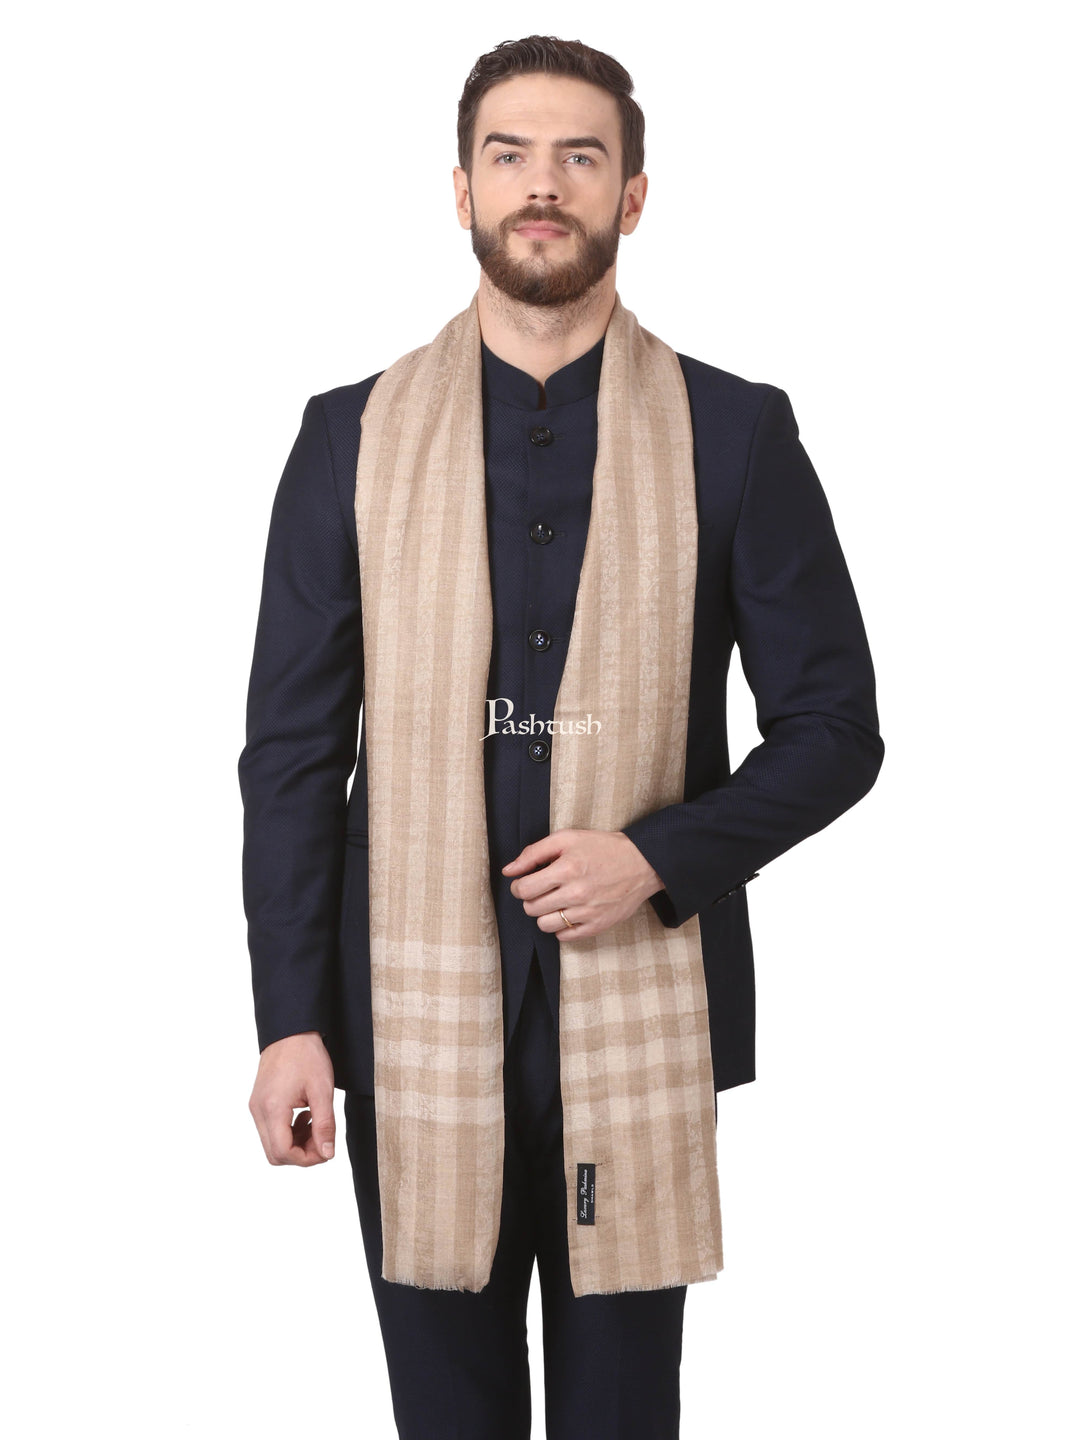 Pashtush India Mens Scarves Stoles and Mufflers Pashtush Woven Mens Fine Wool Stole, Check-Stipe Design, (Beige)